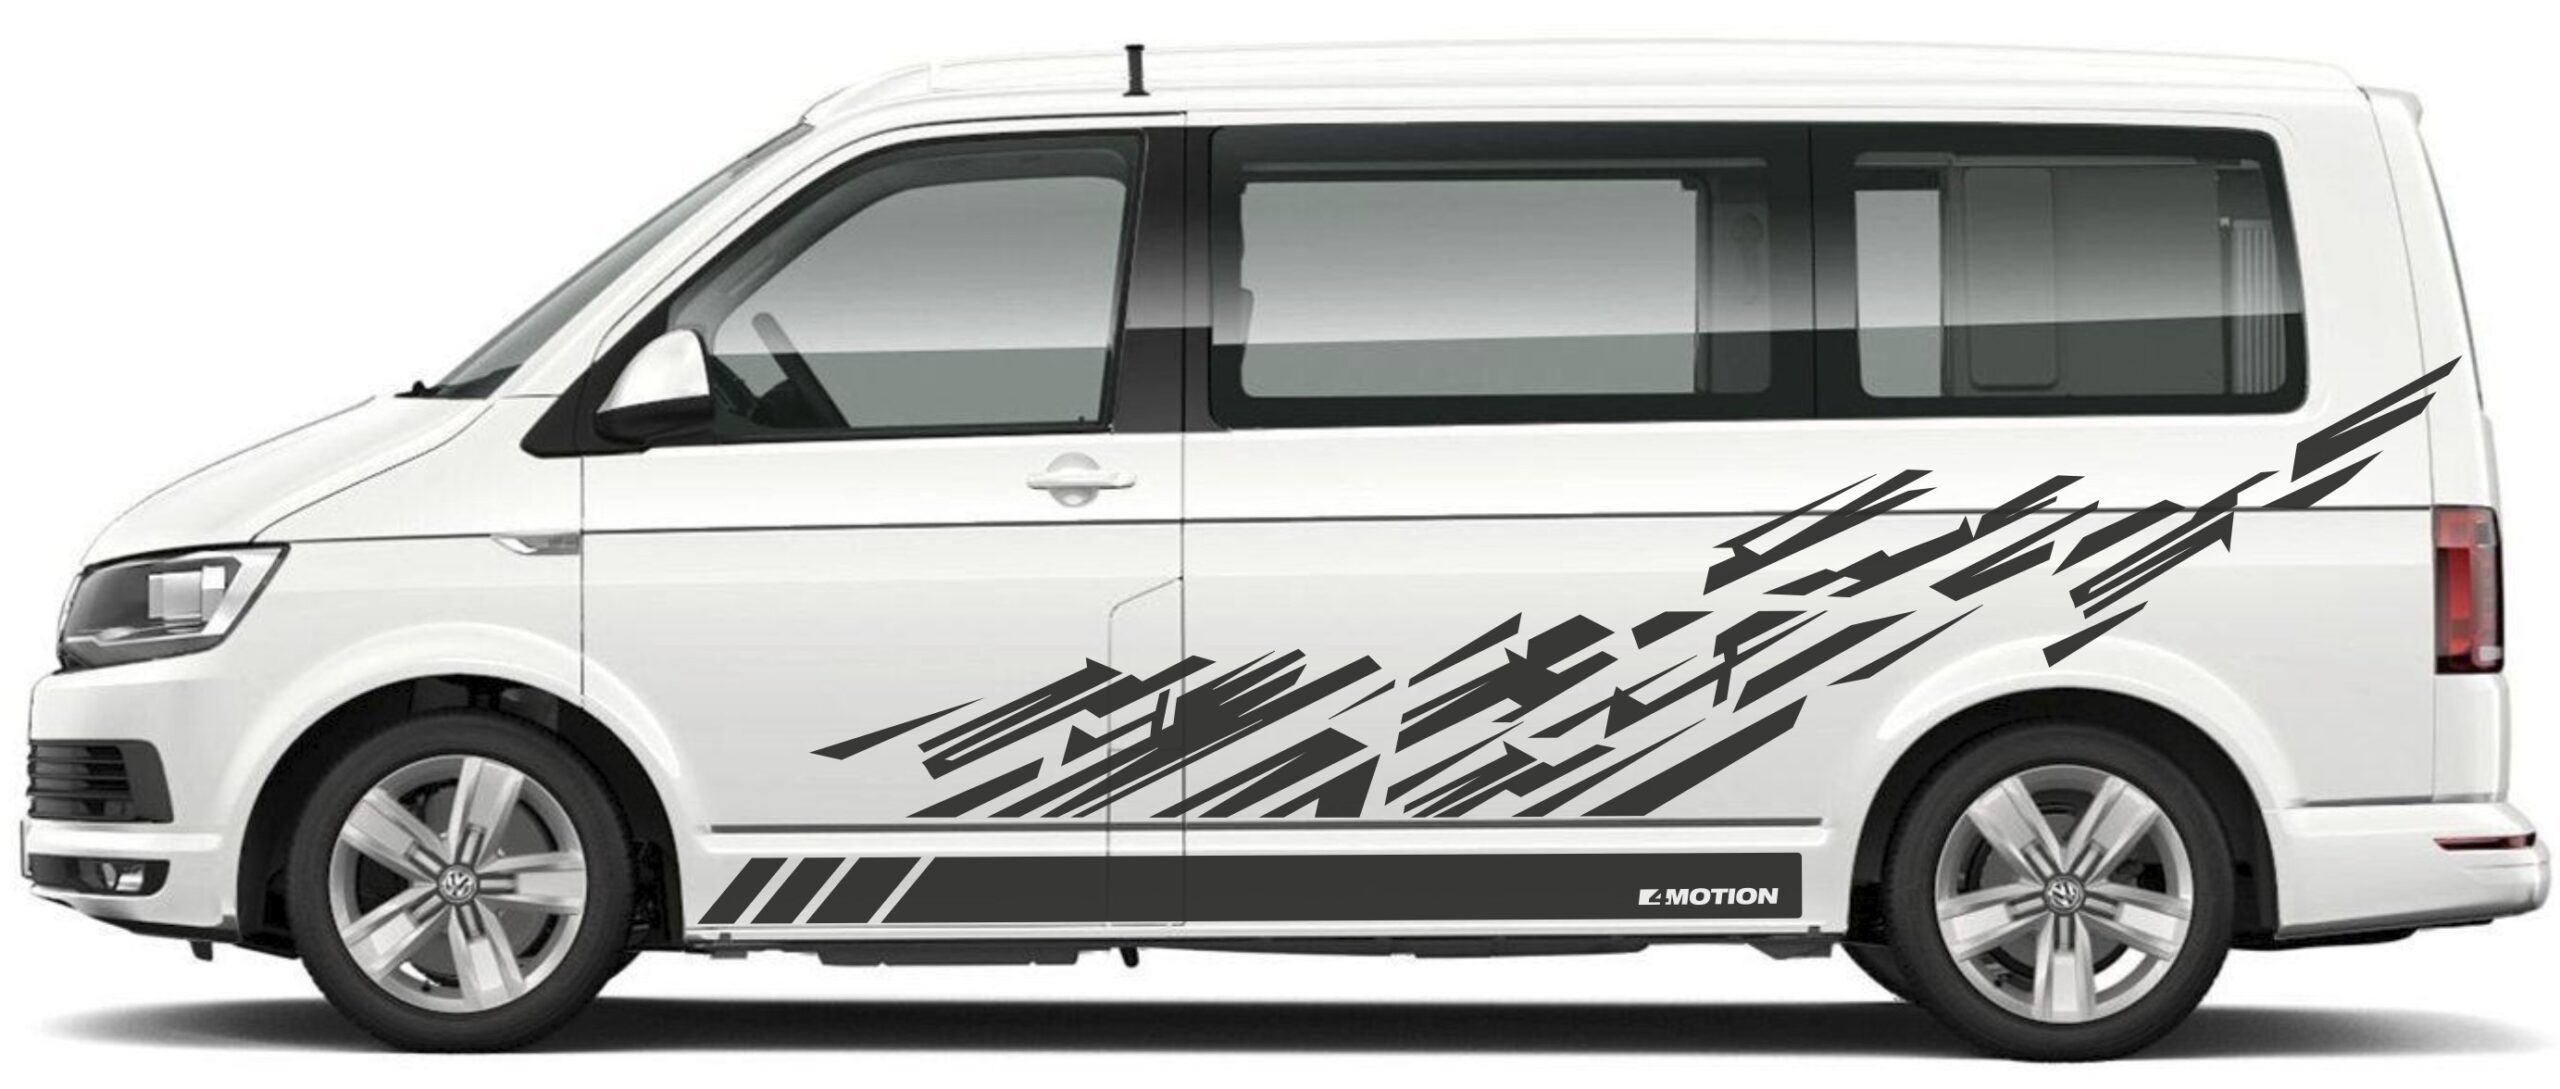 VW Transporter T6_TUNING_4 MOTION naklejki decals stripes sticker aufkleber nalepky samolepky tuning